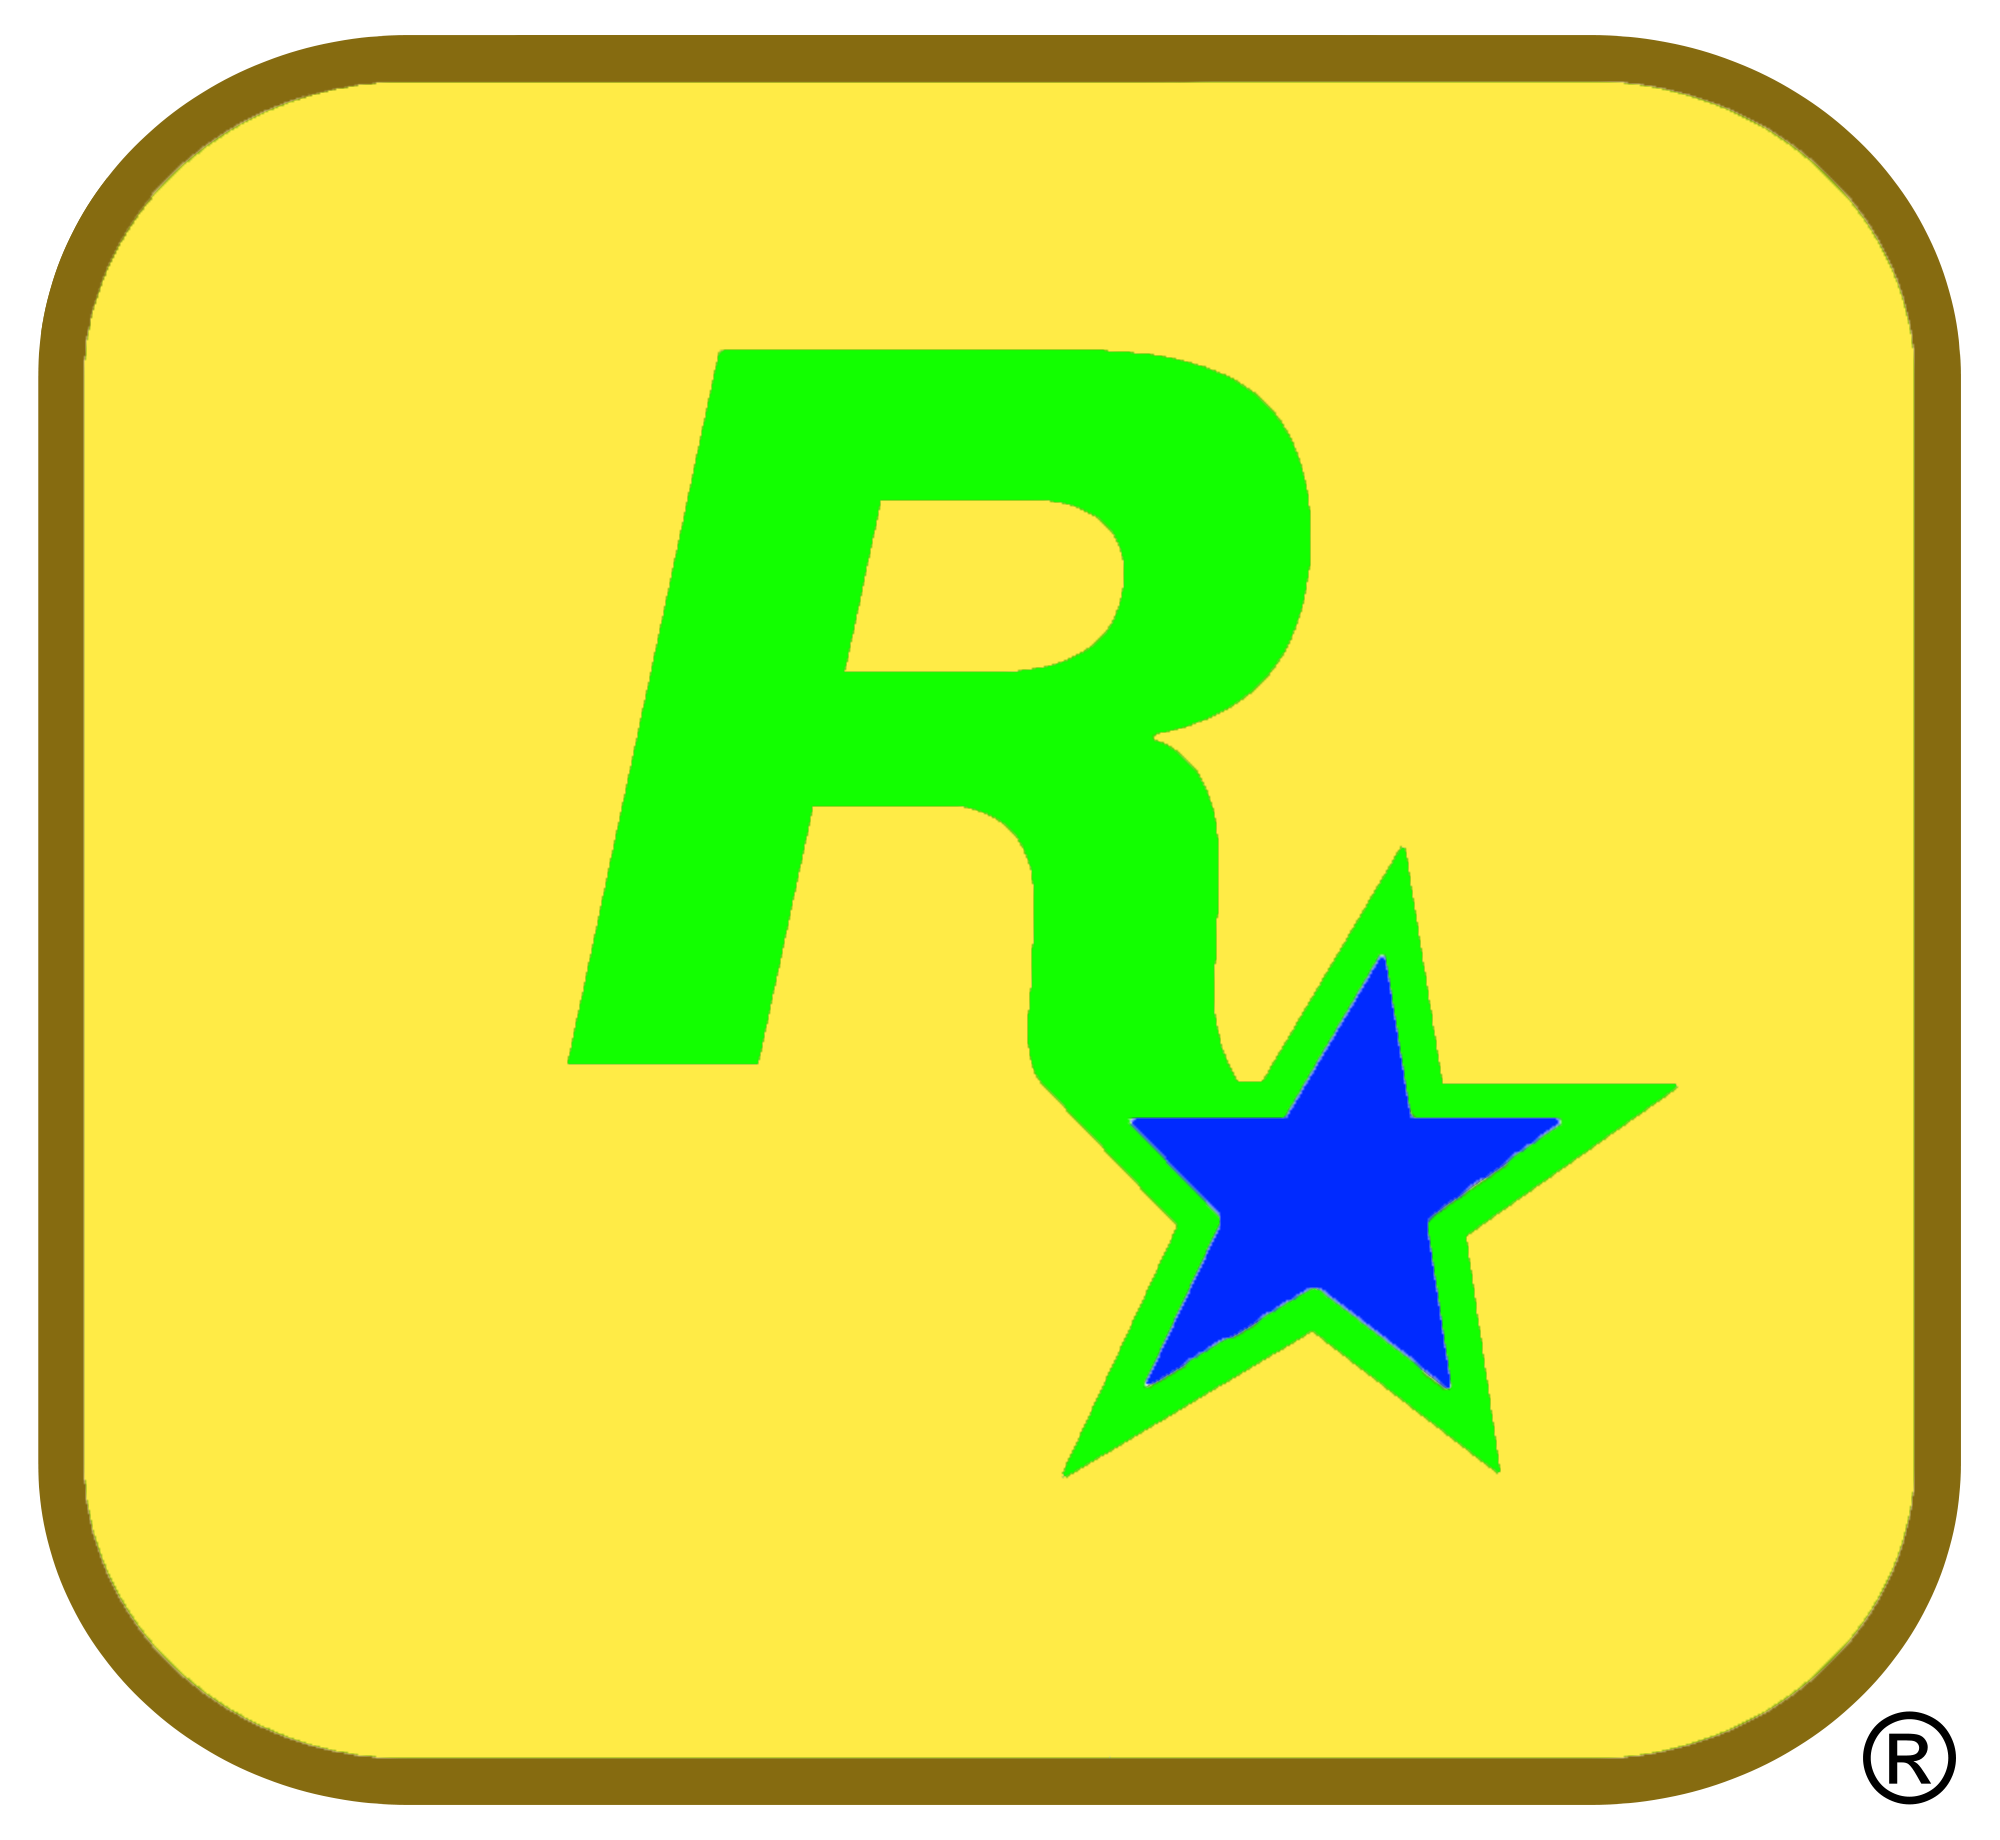 Rockstar is Opening a New Game Studio in Los Angeles - FandomWire